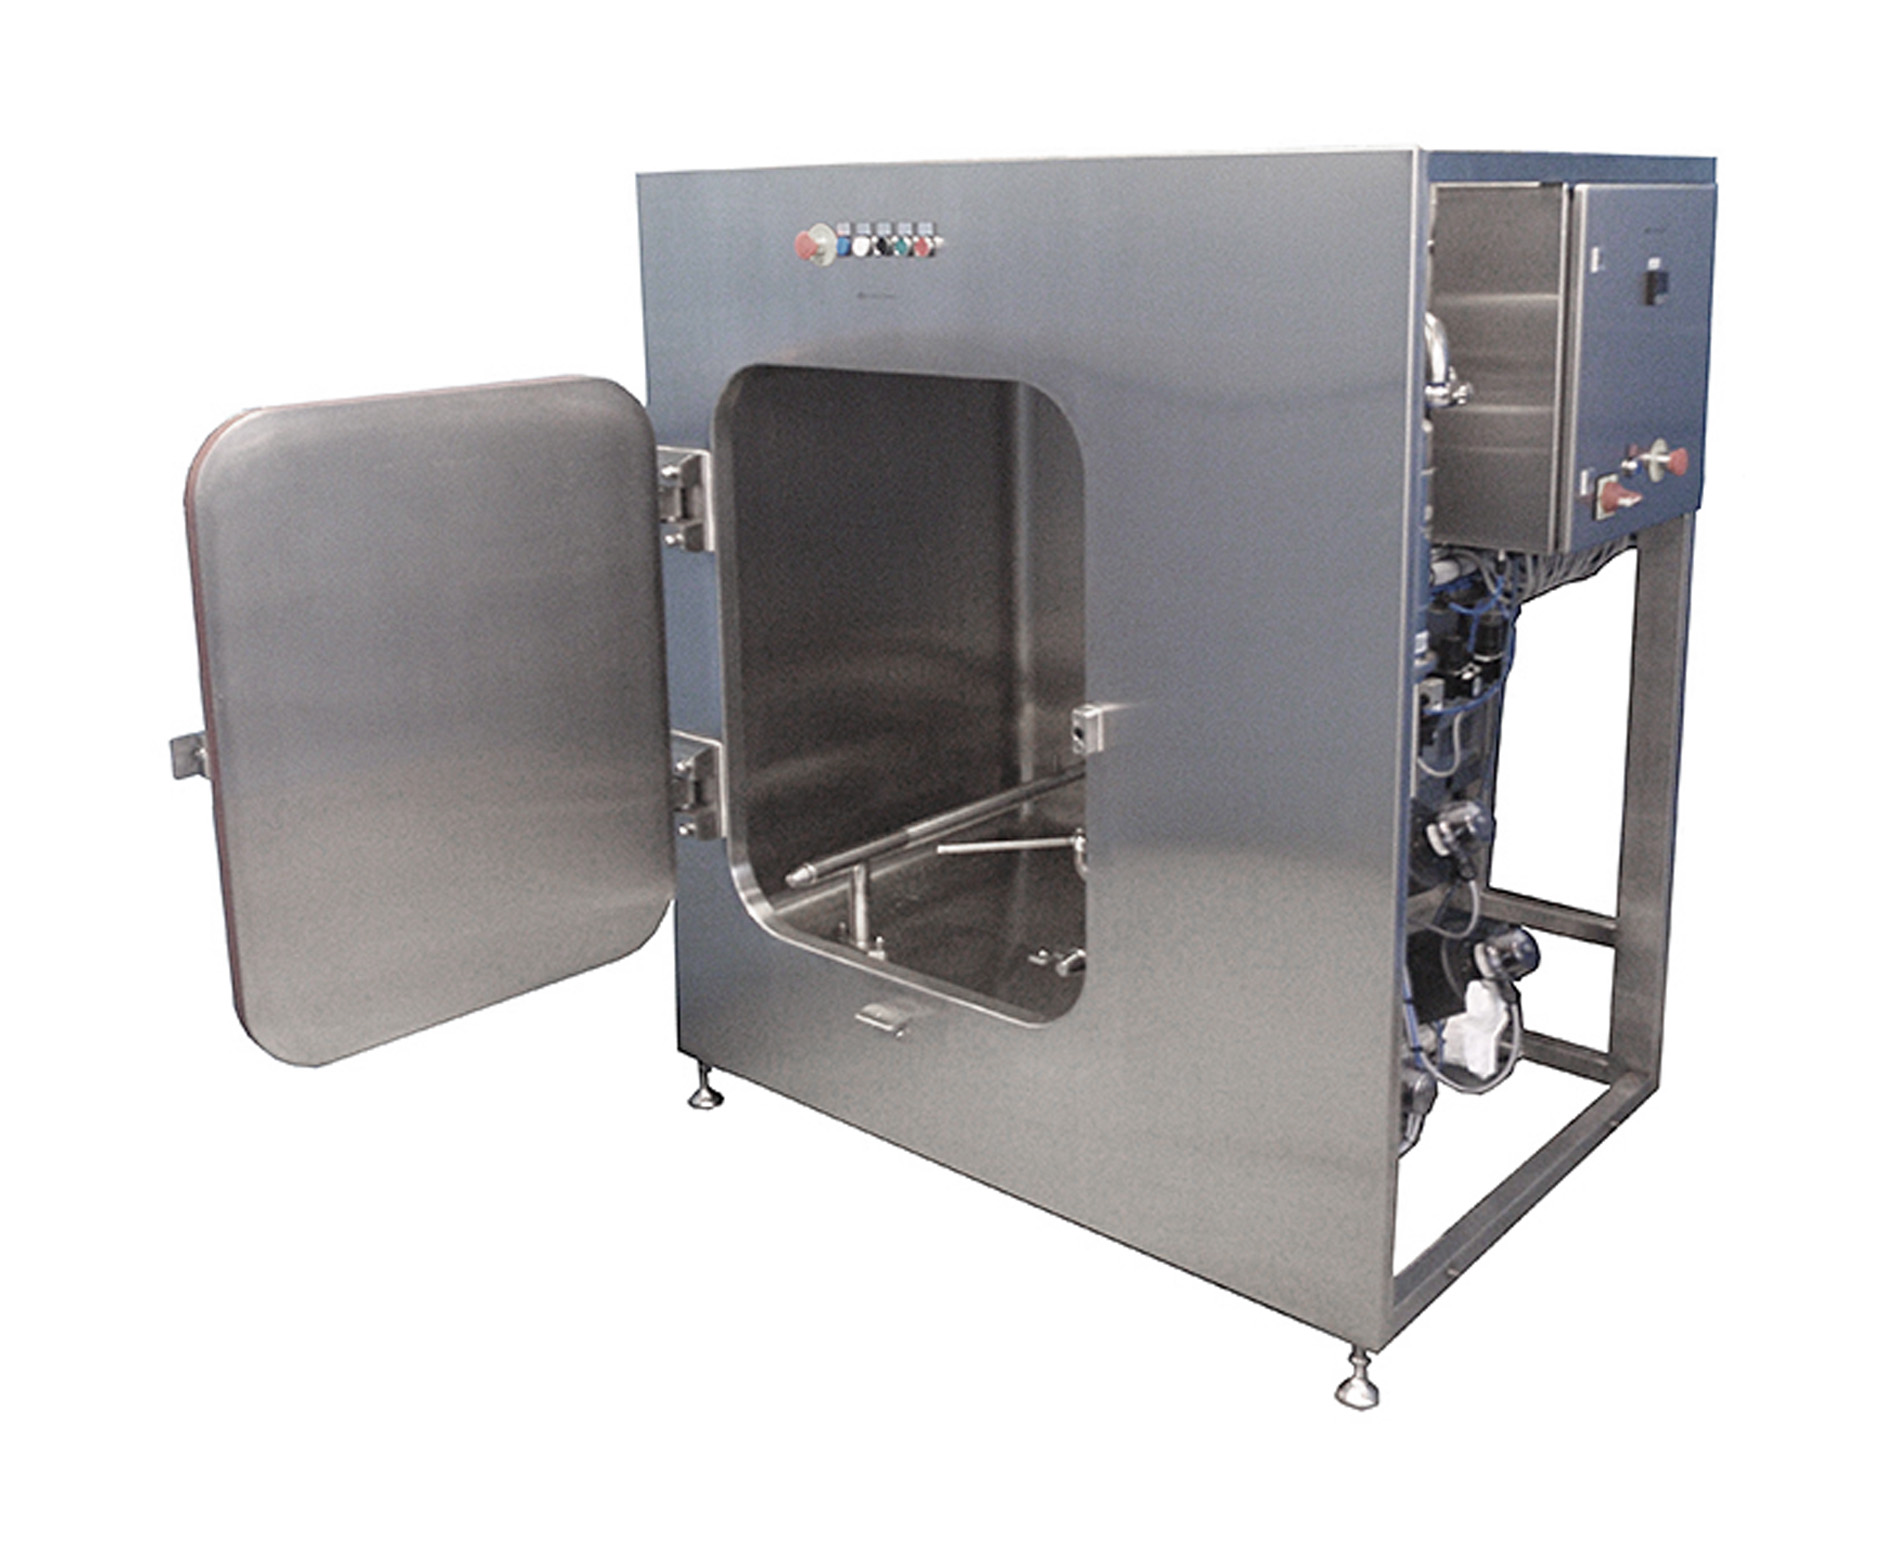 STERIWASHER - Decontamination Facilities, Washing Systems